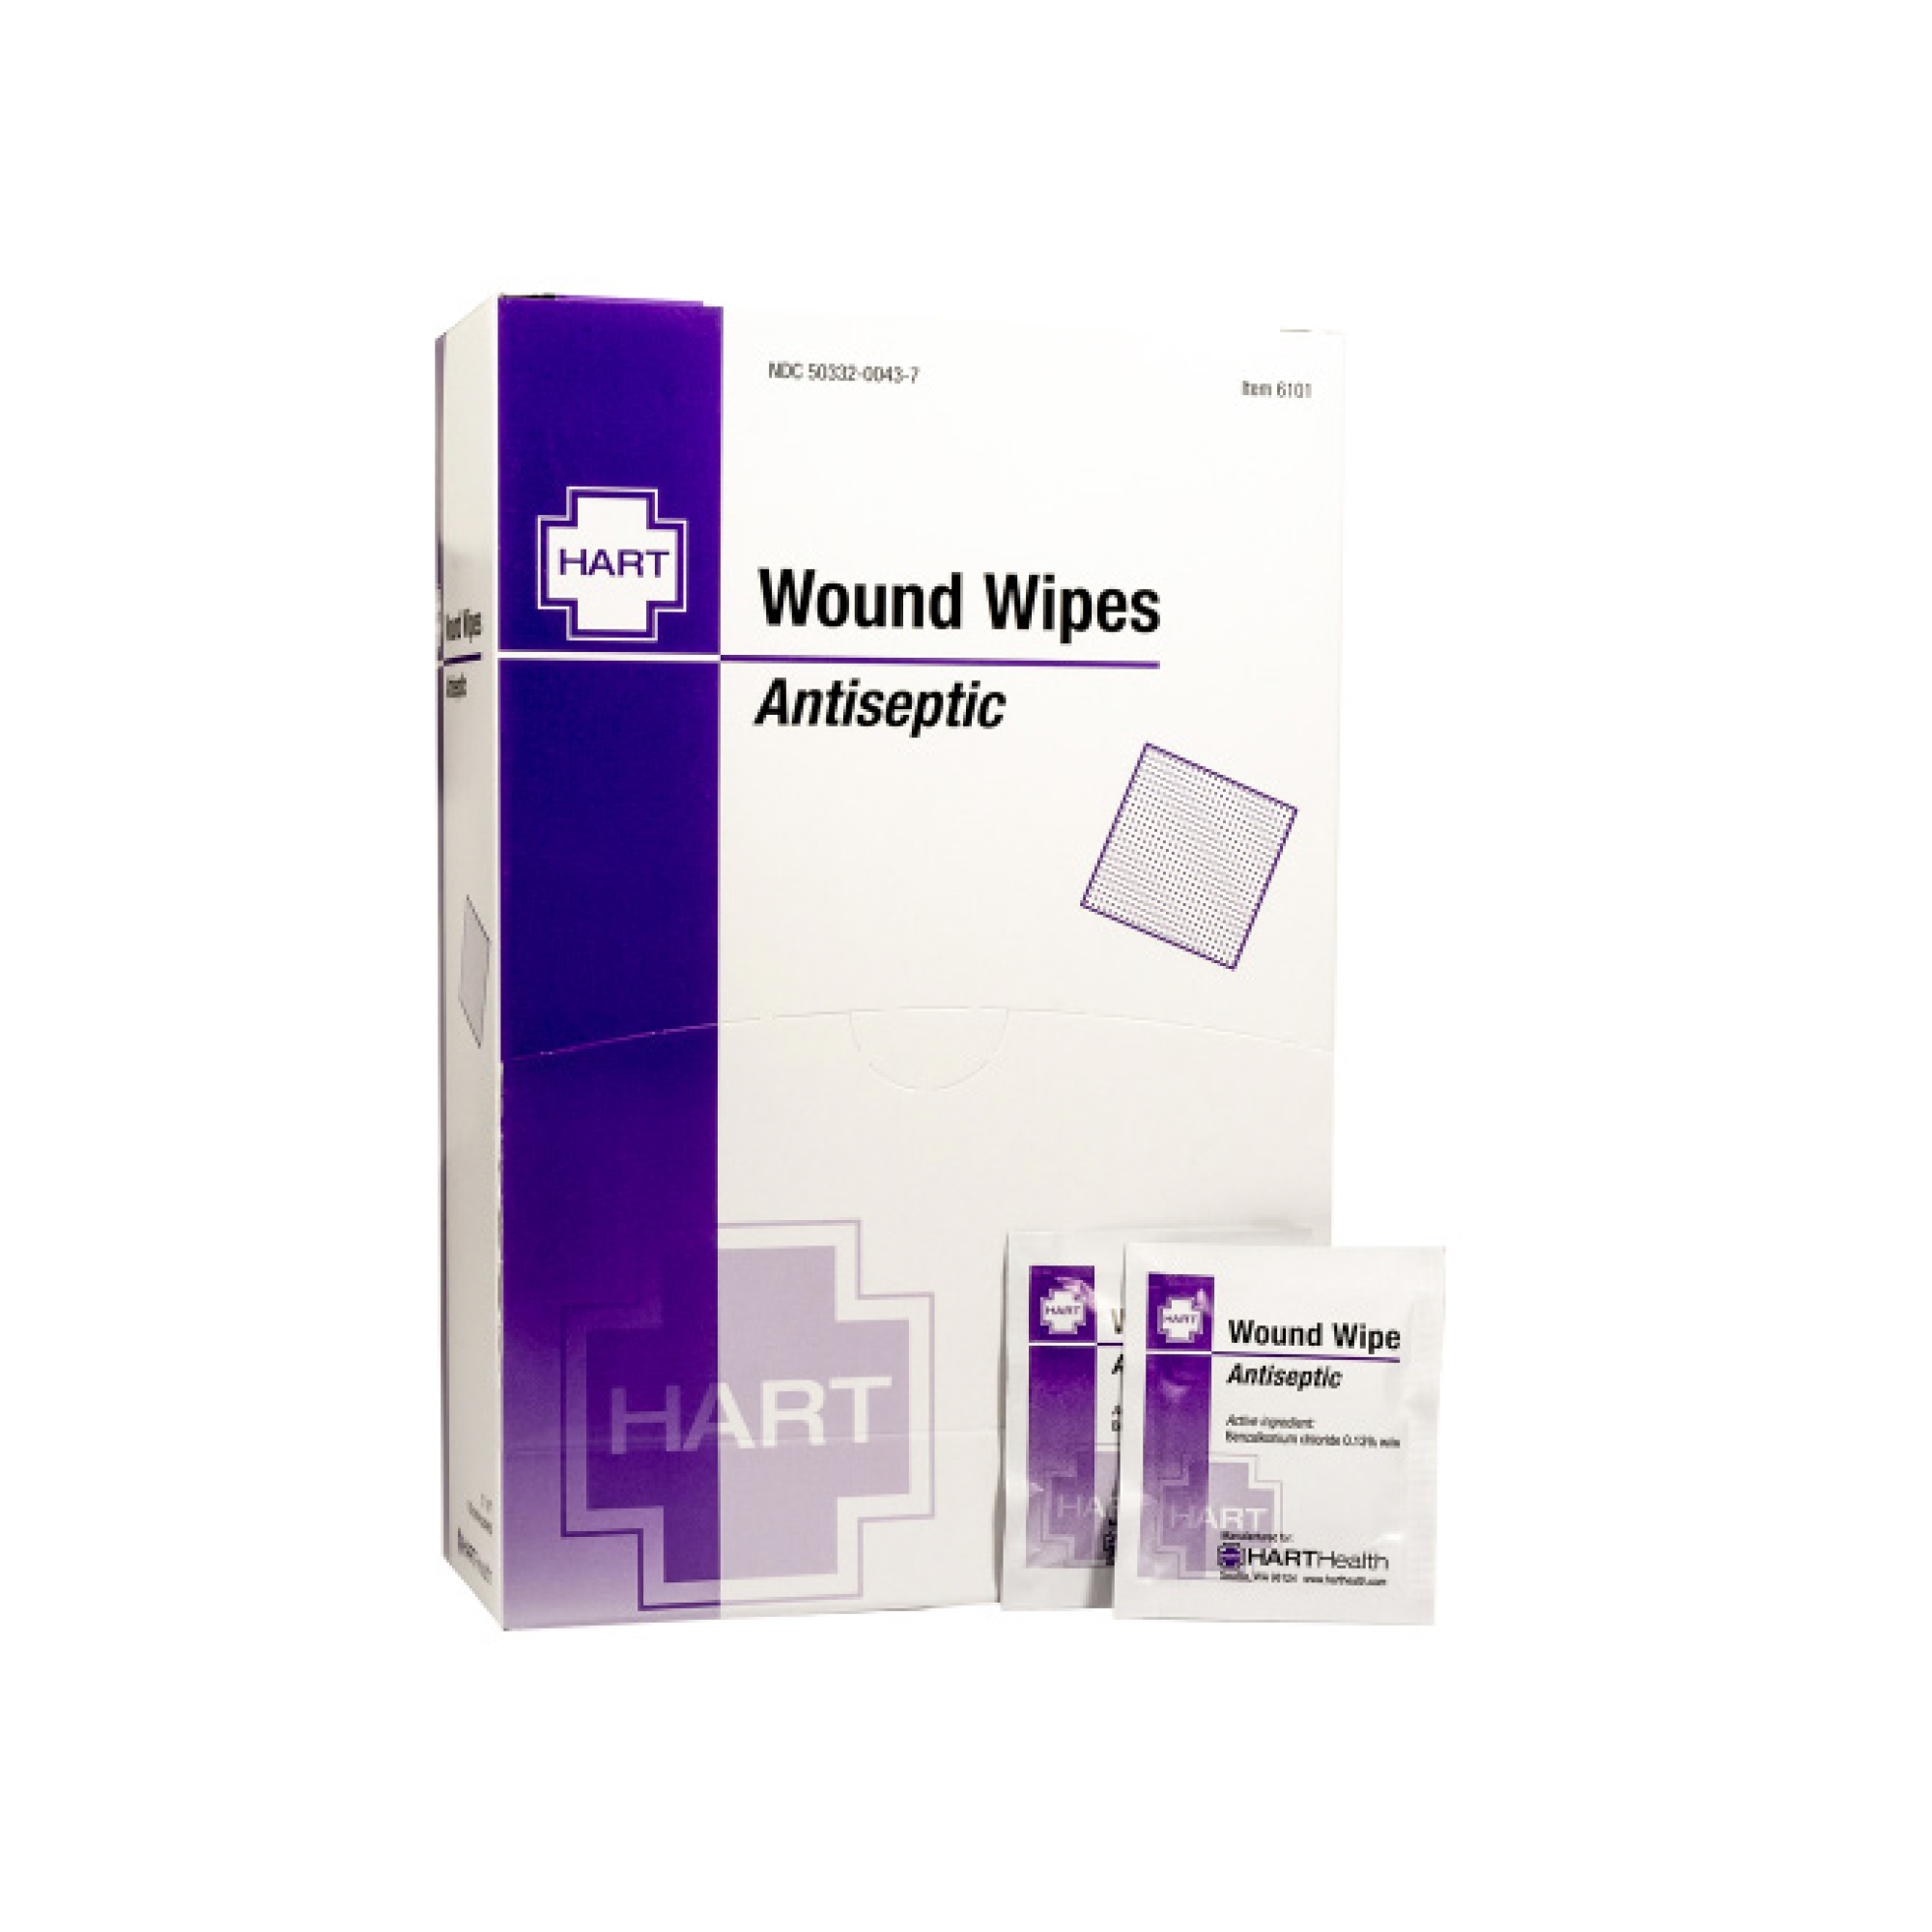 Wound Wipes box